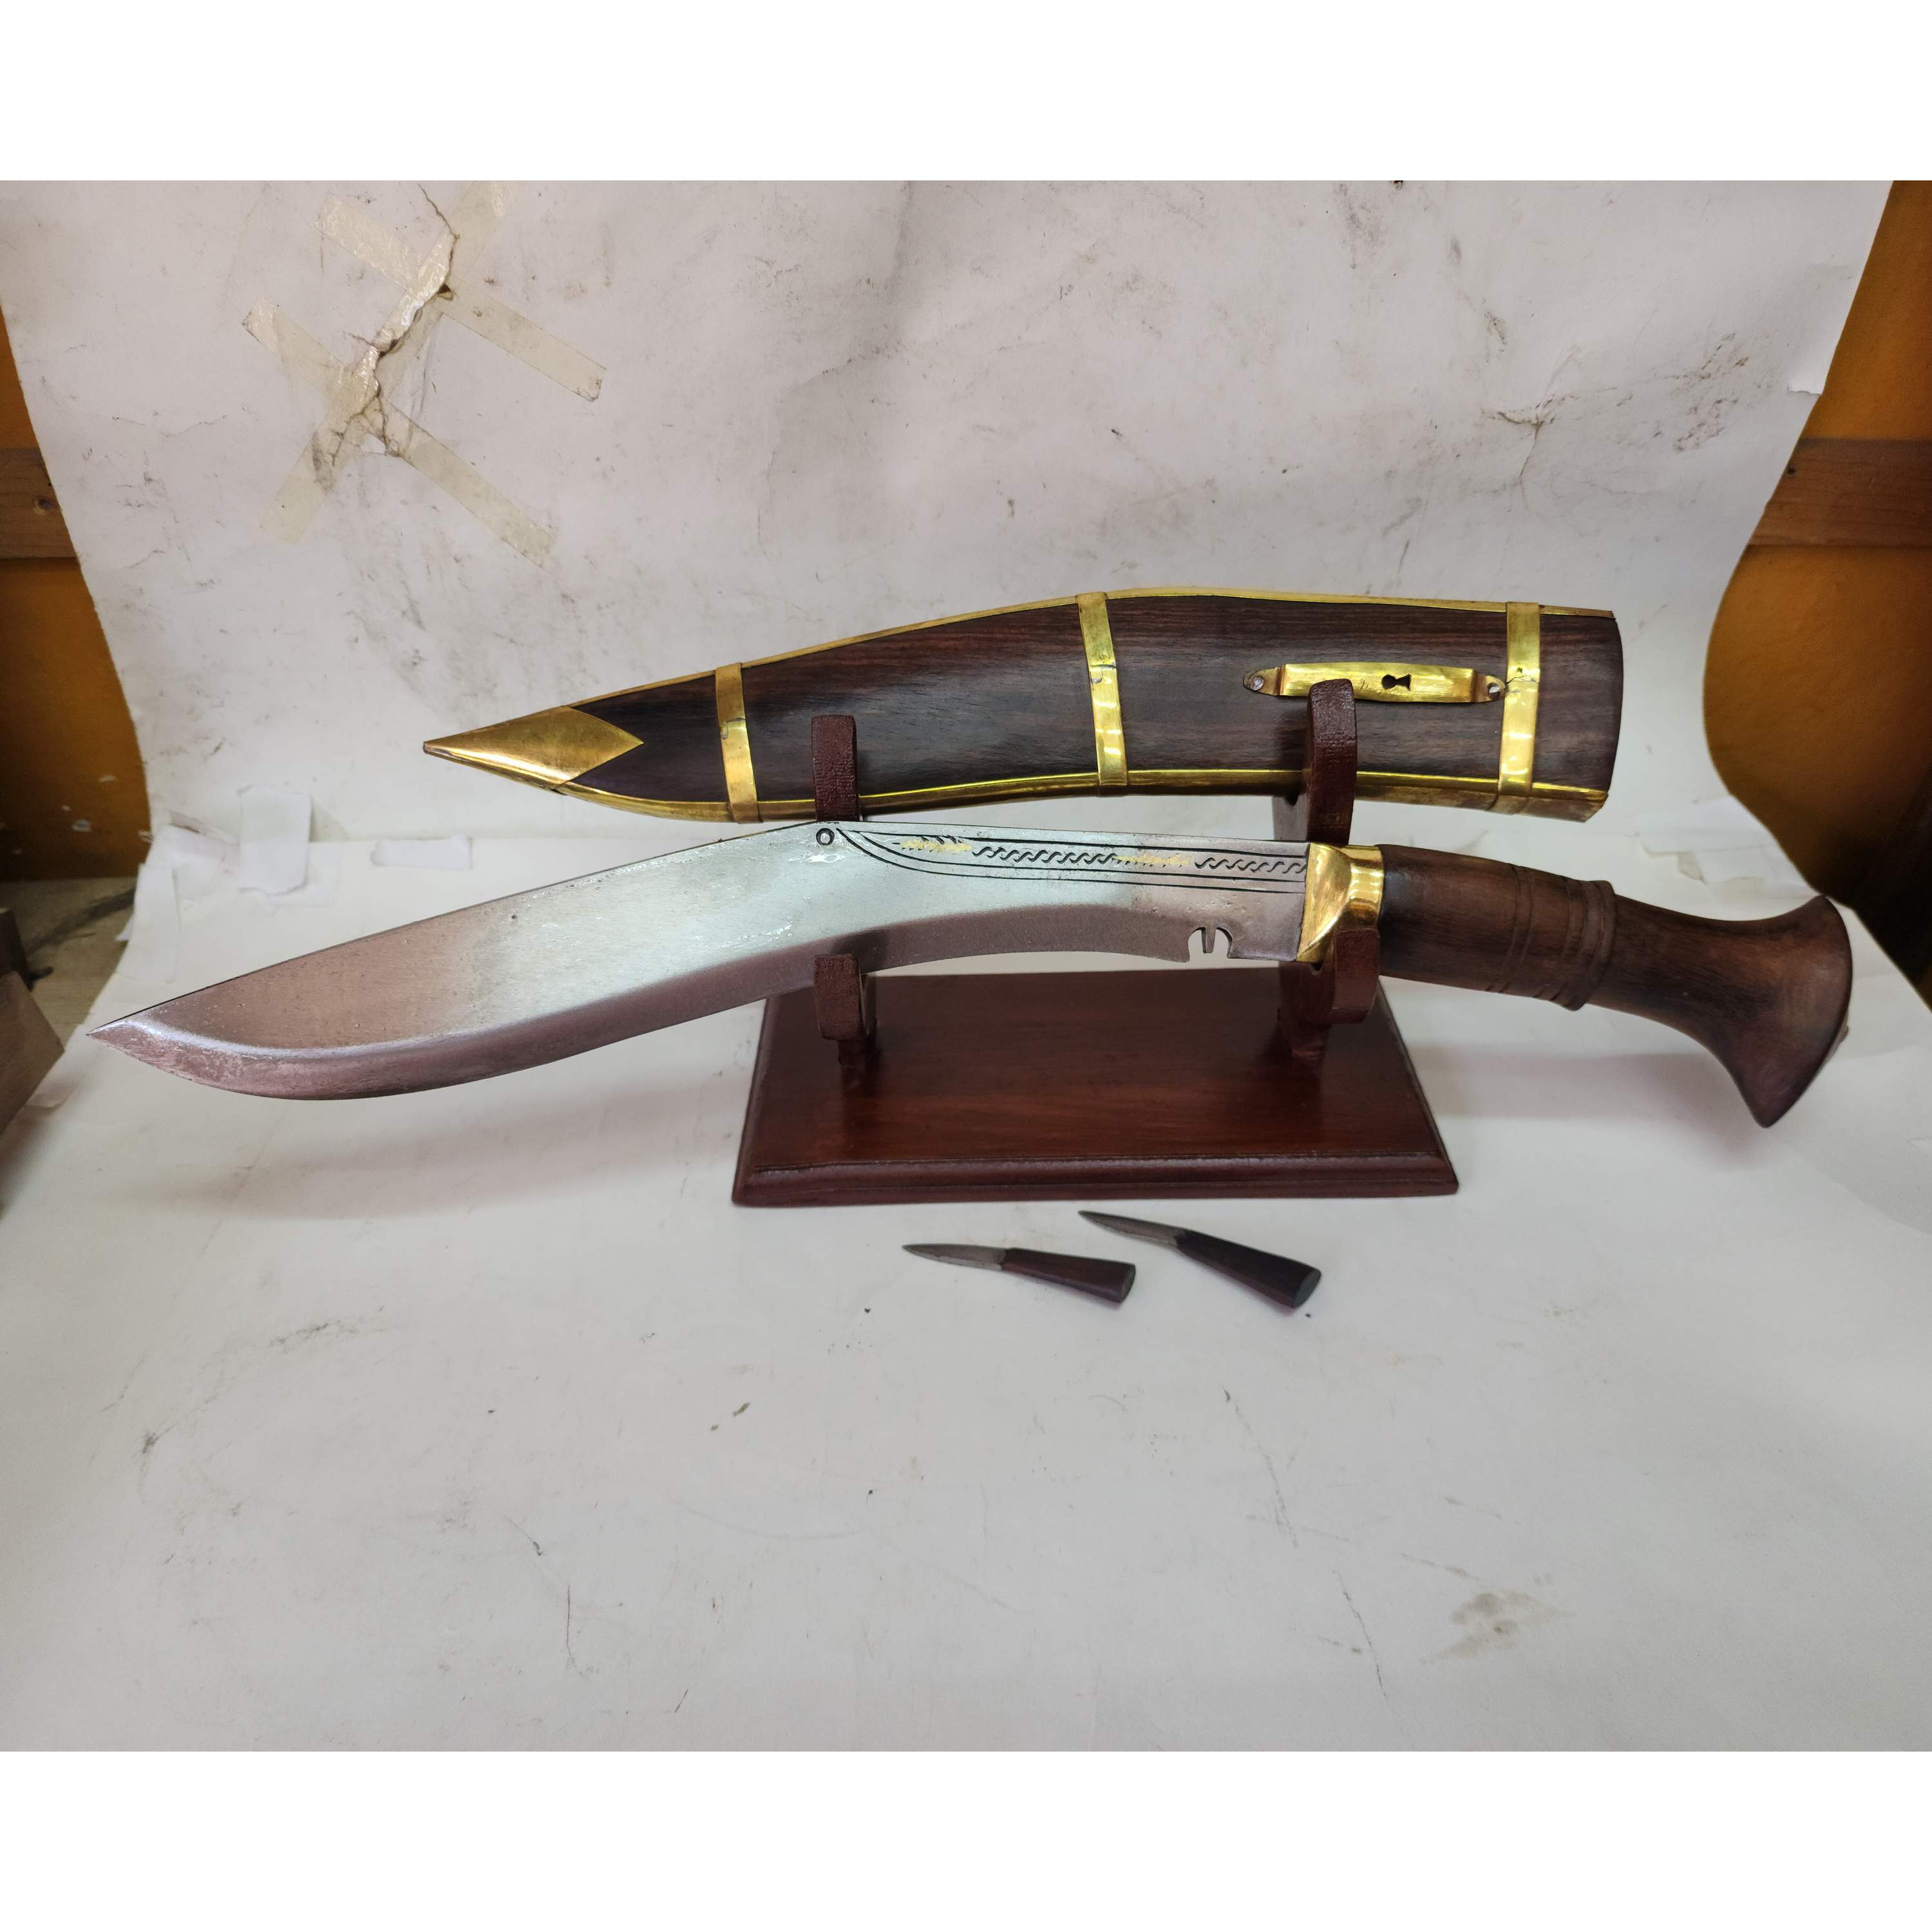 12 Inch, dhankute Khukuri, Gurkha Knife - With Leather Cover And Stand, Nepali Machete